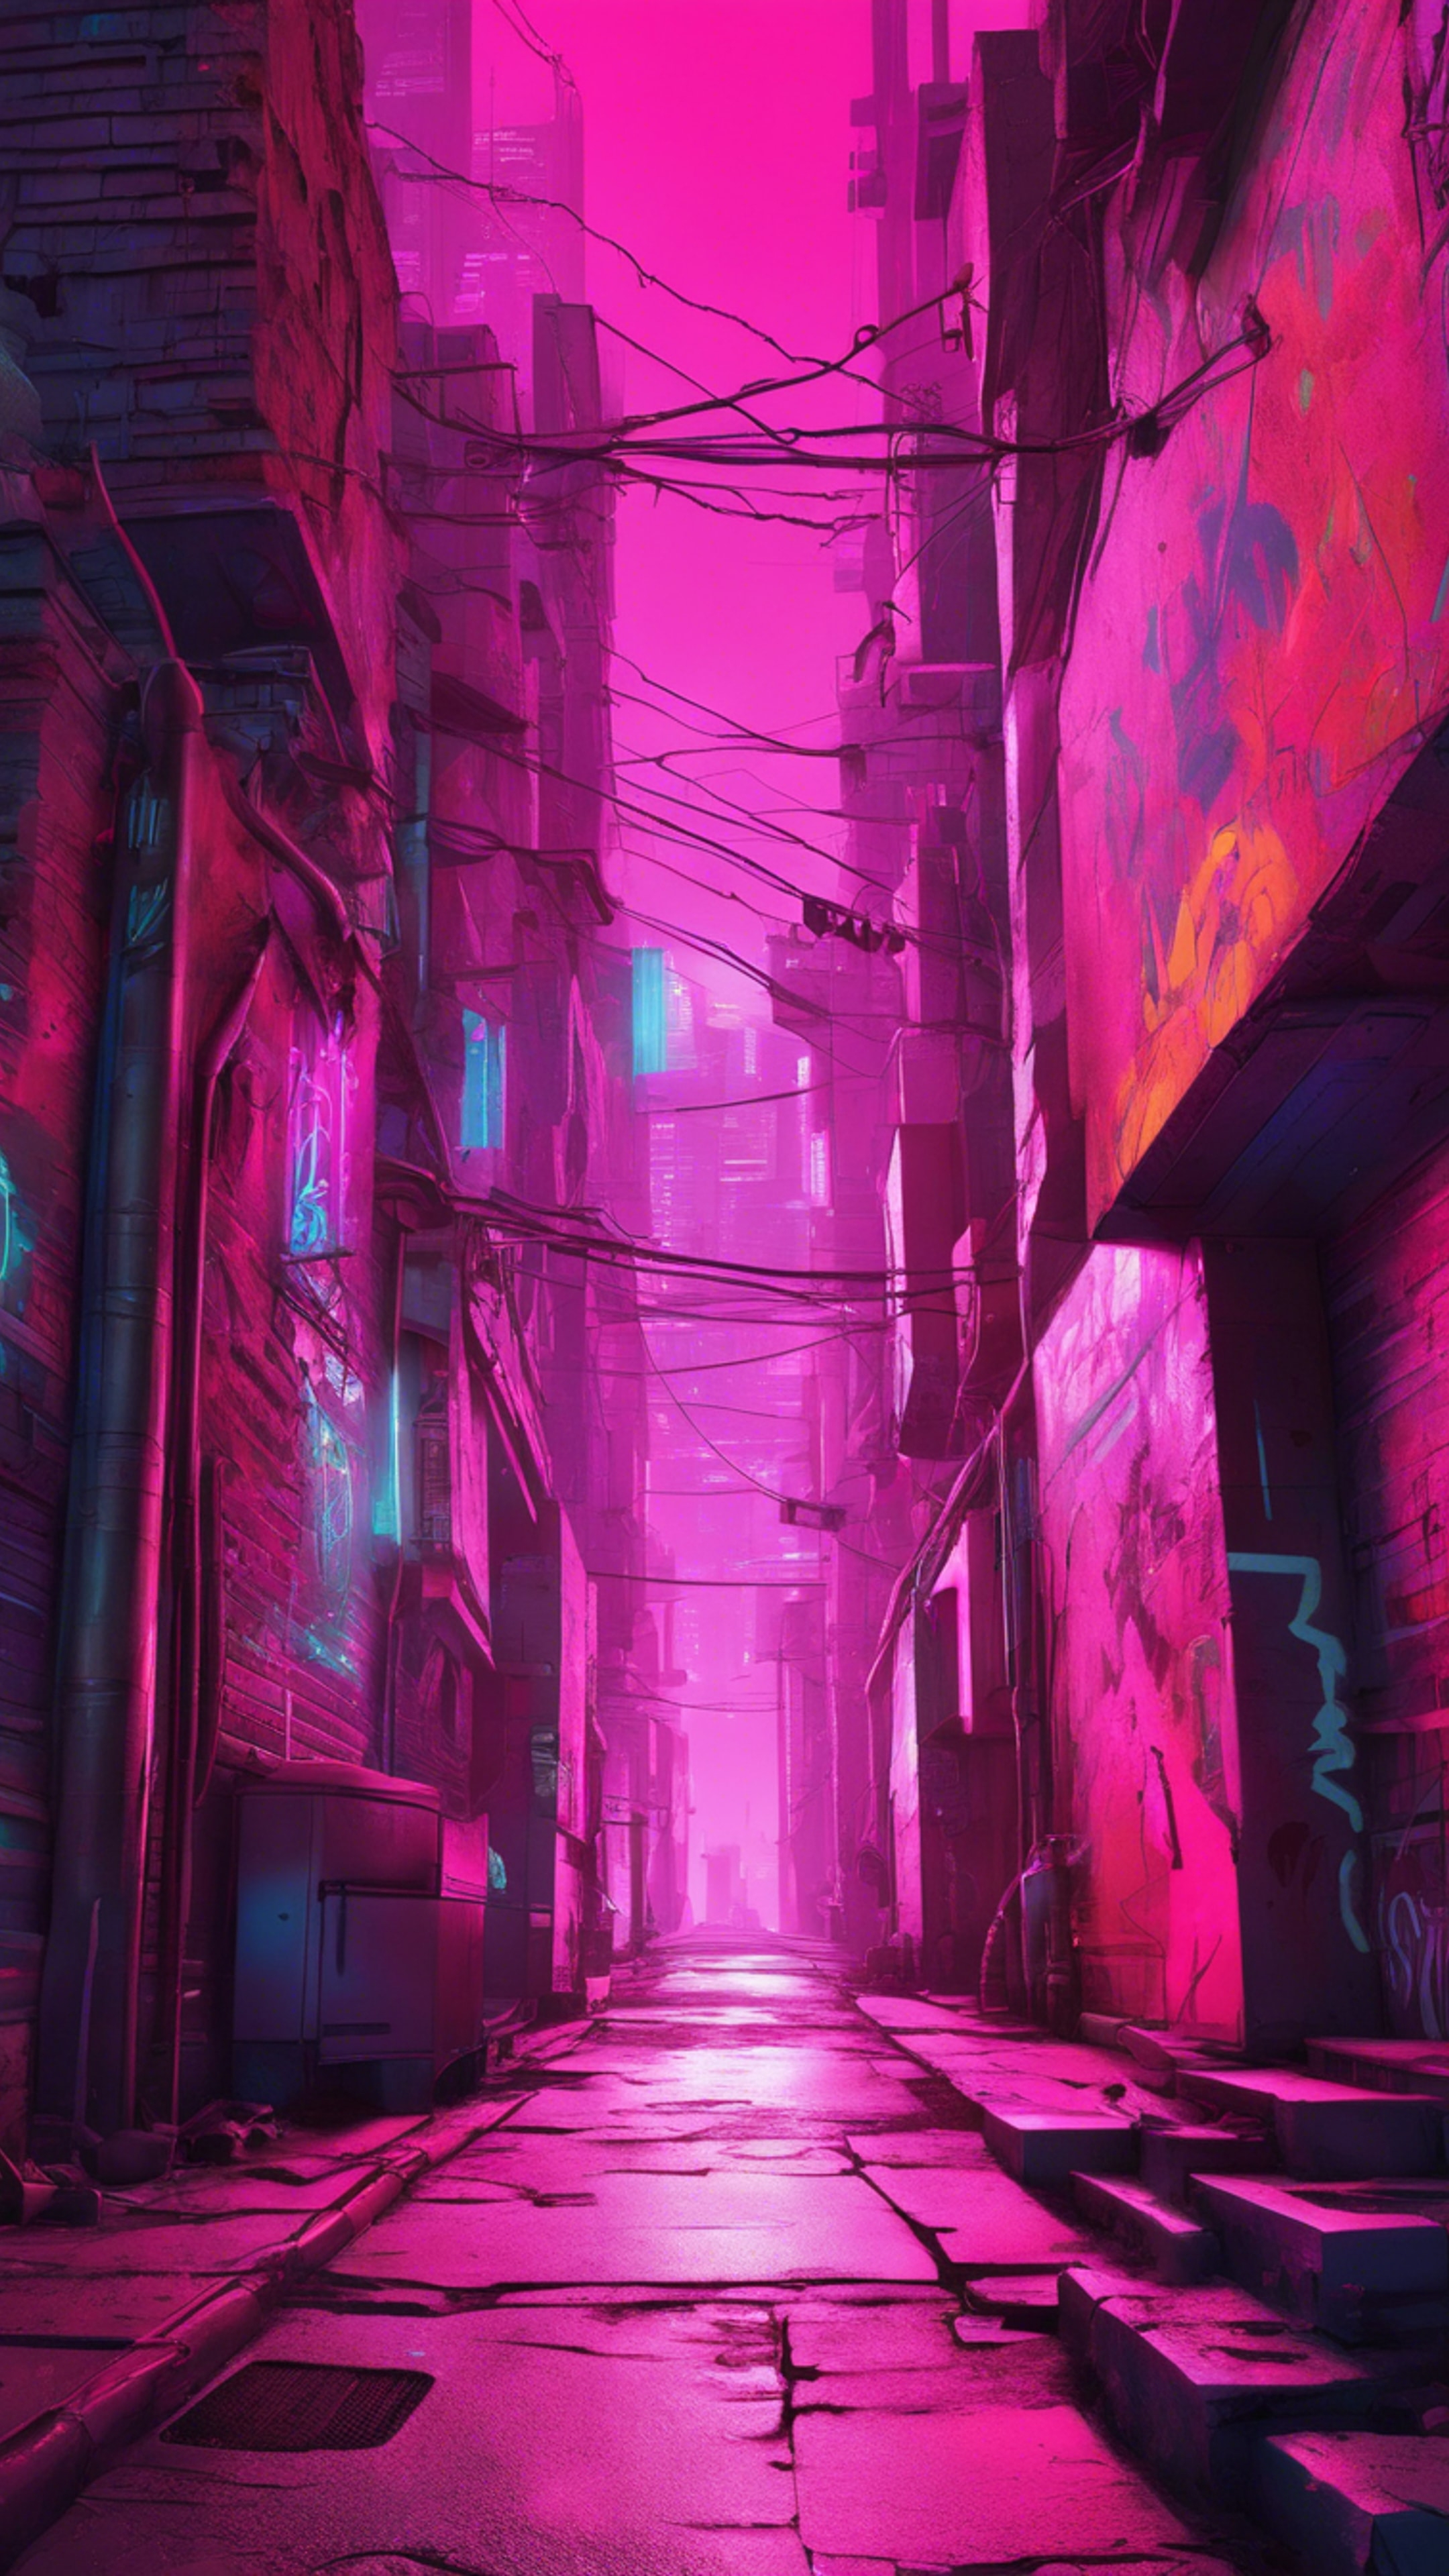 A neon-lit city alley at midnight, with bright pink graffiti on the walls, radiating a cyberpunk aura. Дэлгэцийн зураг[6a5b63b1eaec4ac98291]